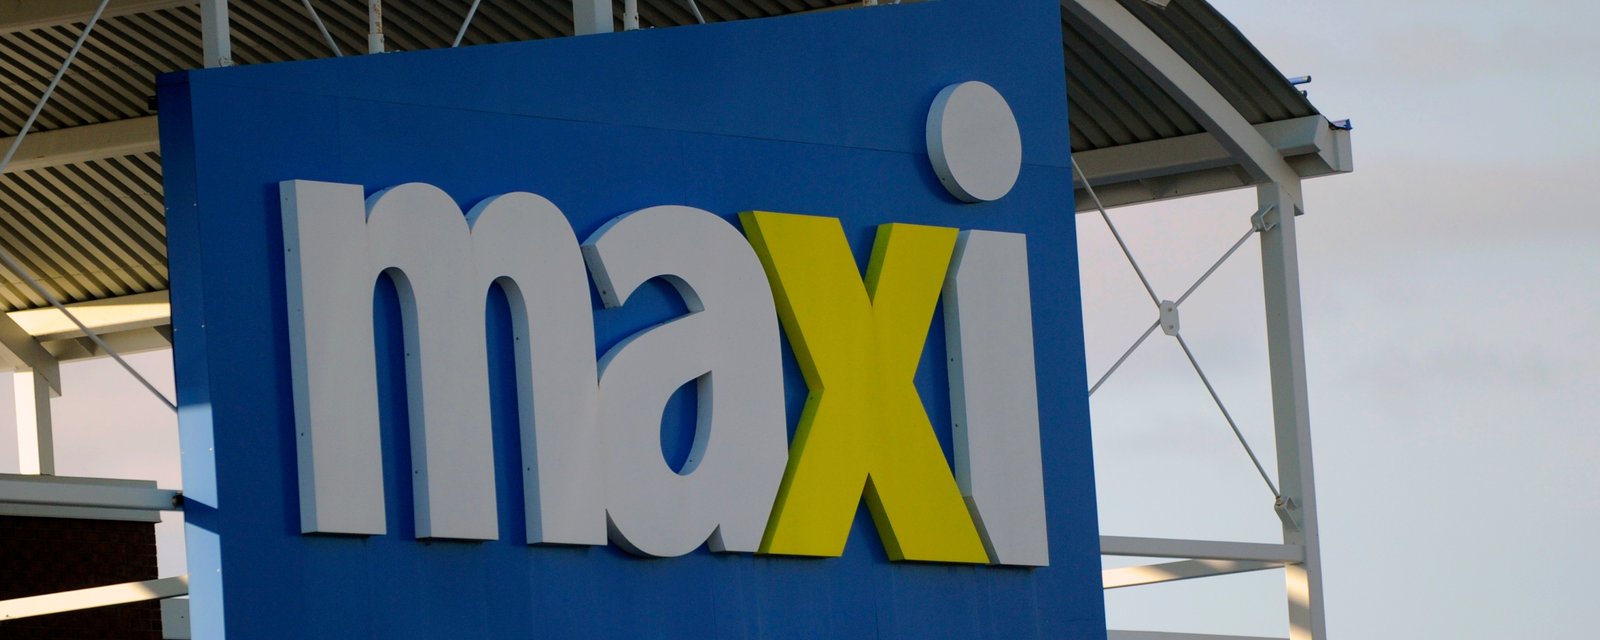 Le gel des prix de nombreux produits chez Maxi et Provigo prendra bientôt fin.